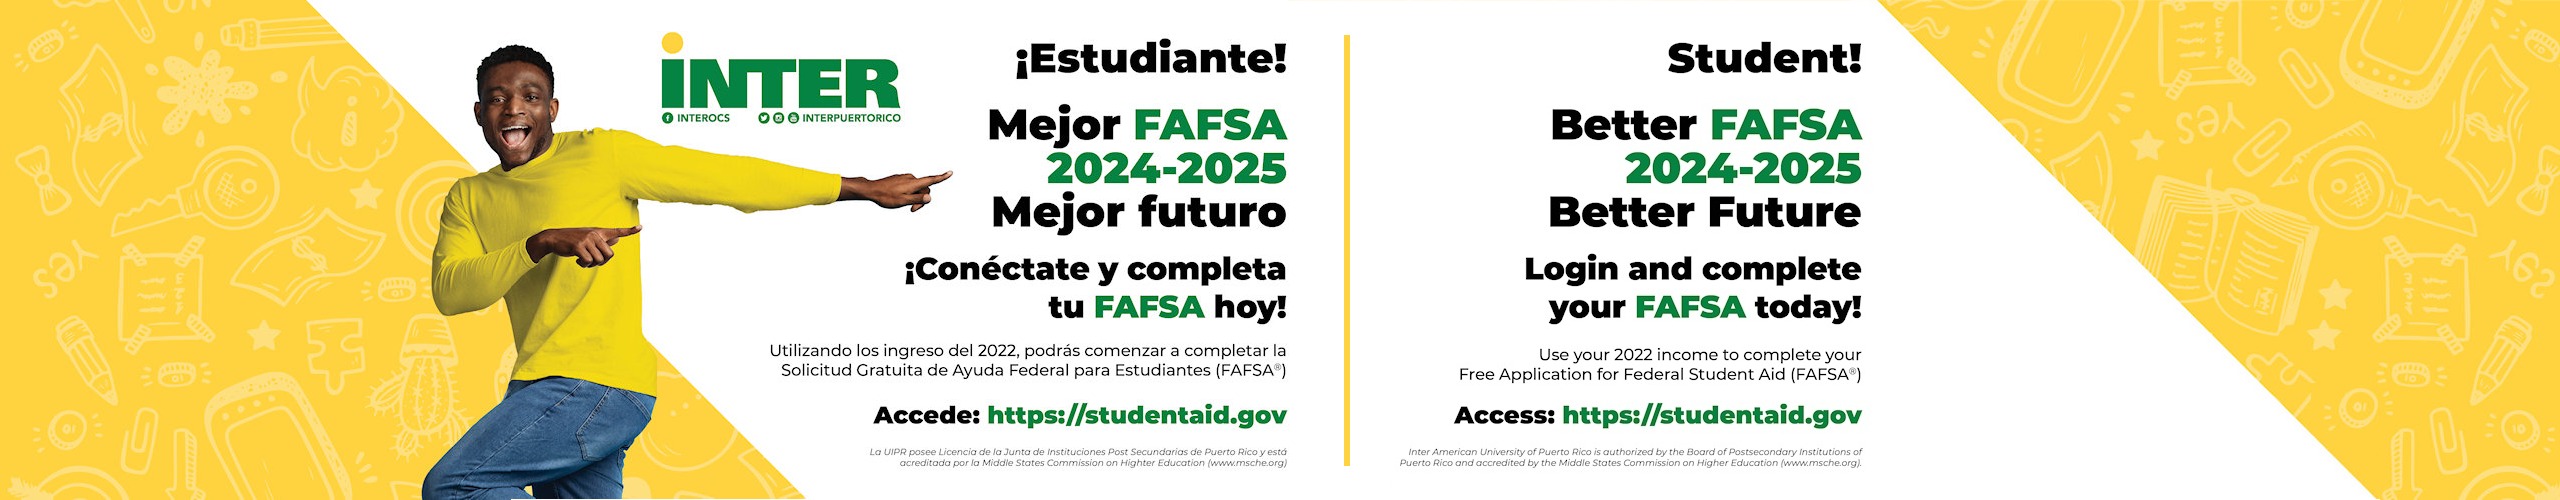 Completa tu FAFSA hoy - Complete your FAFSA today